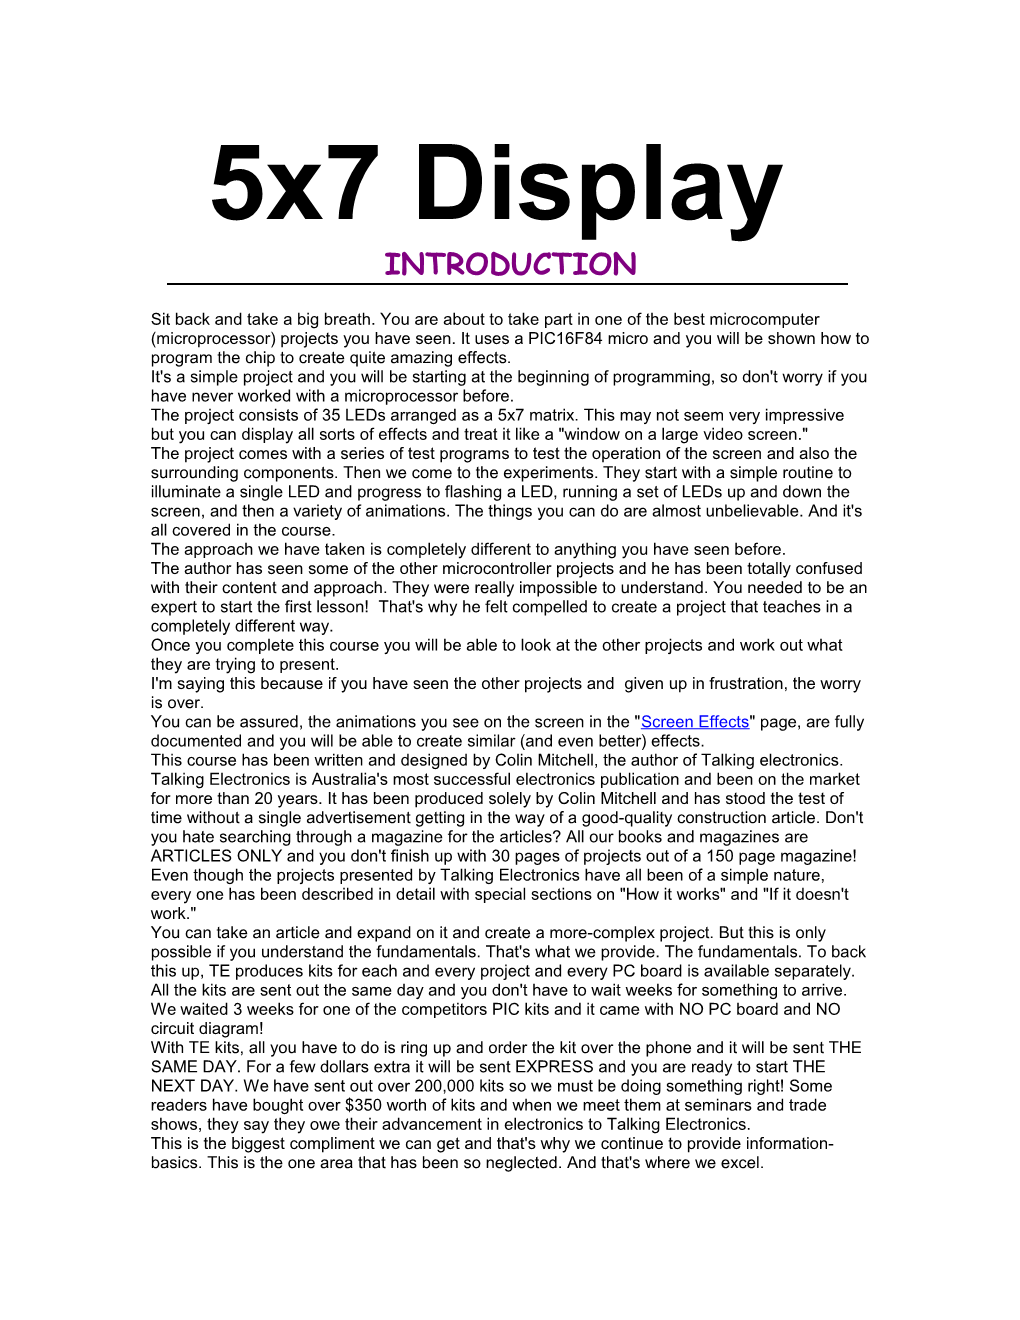 5X7 Display INTRODUCTION